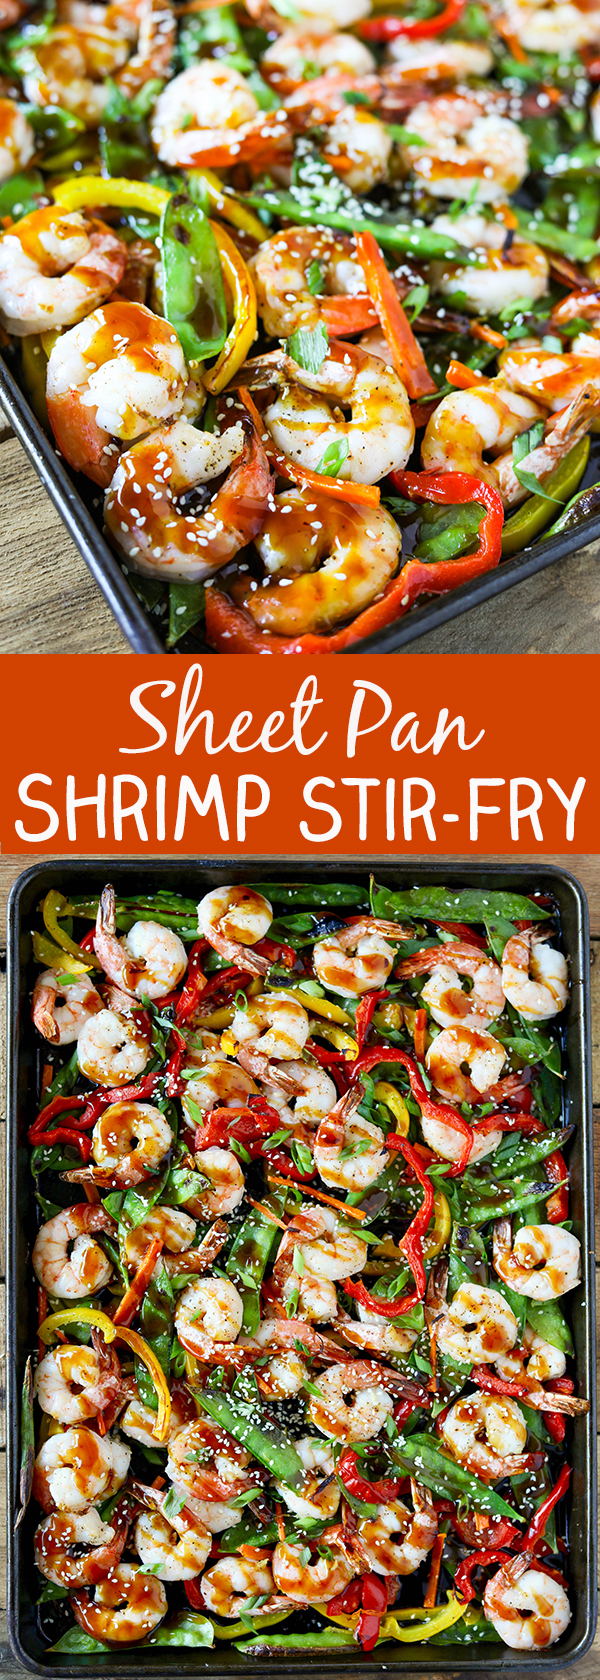 Sheet Pan Shrimp Stir-Fry - easy sheet pan dinner idea!